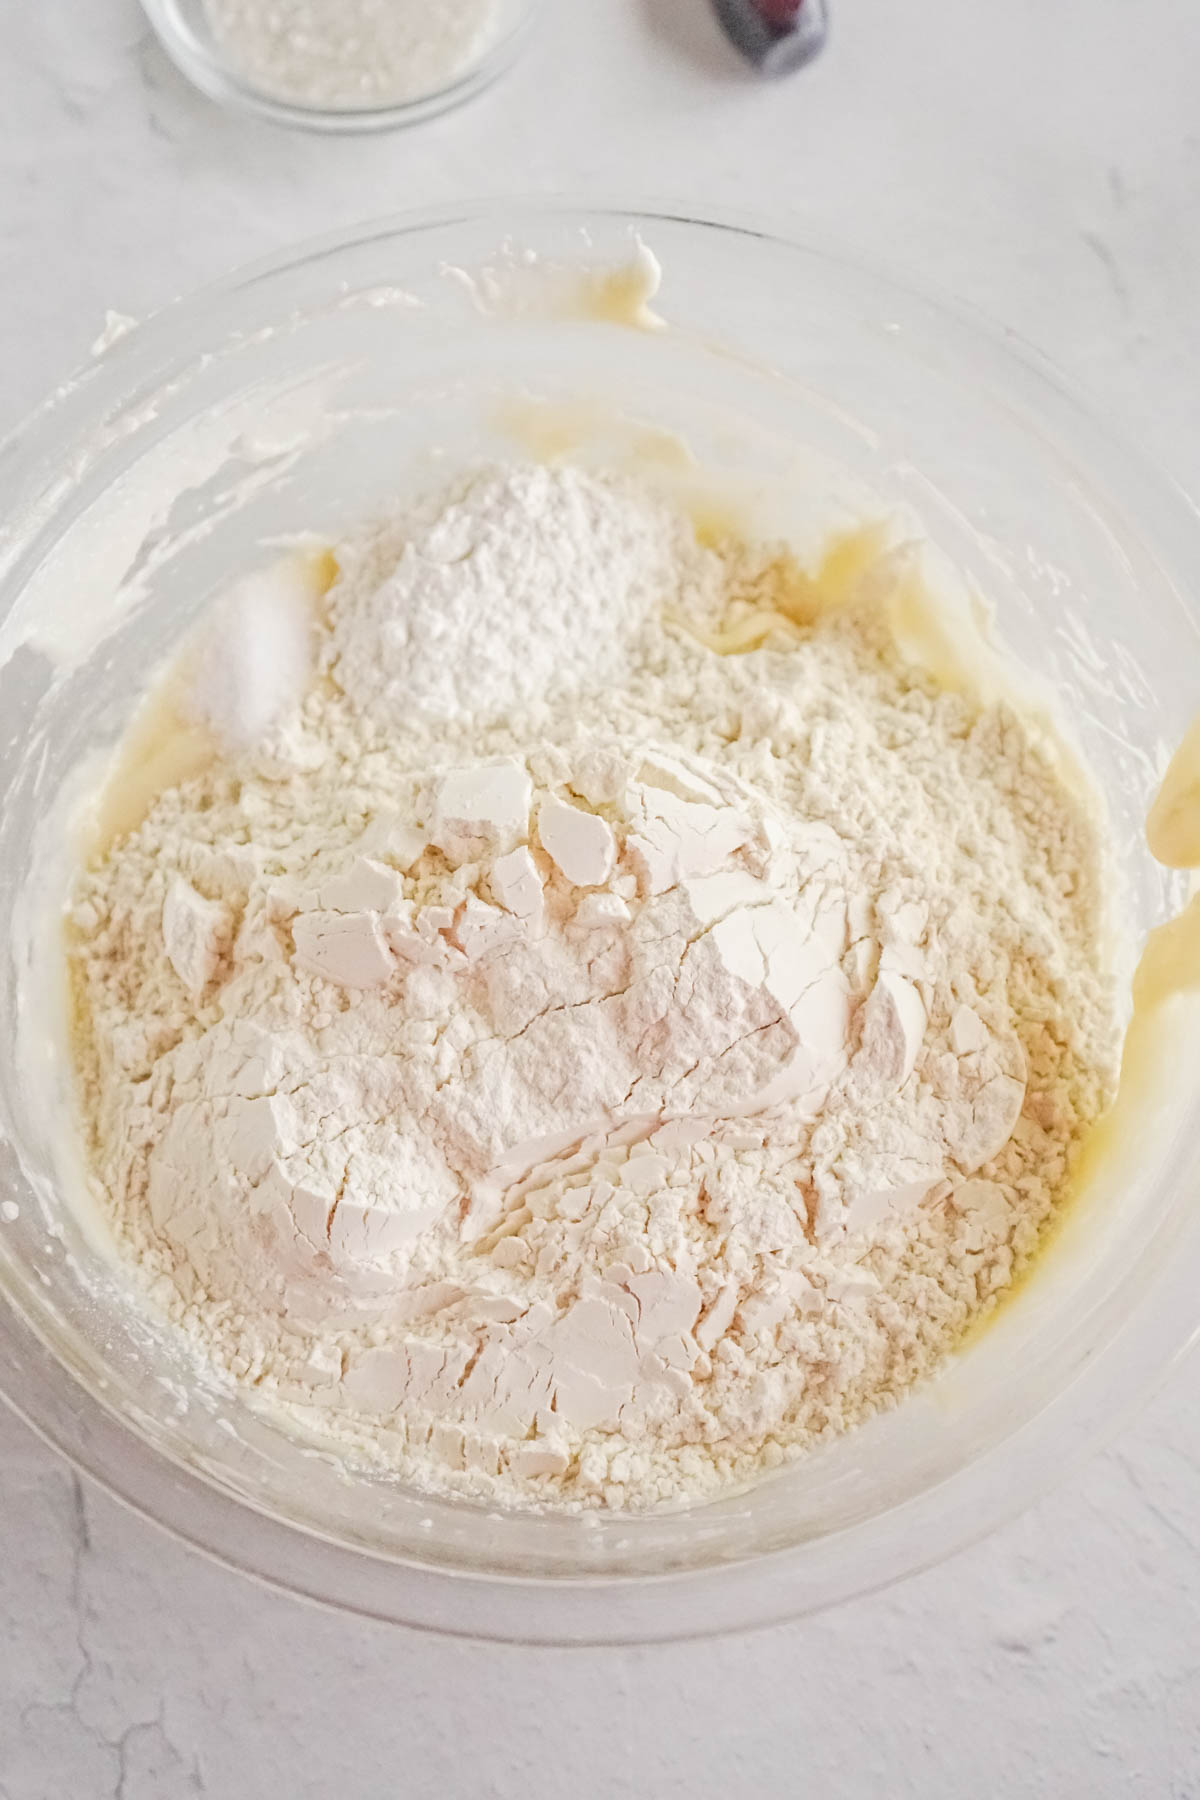 flour in a glass bowl